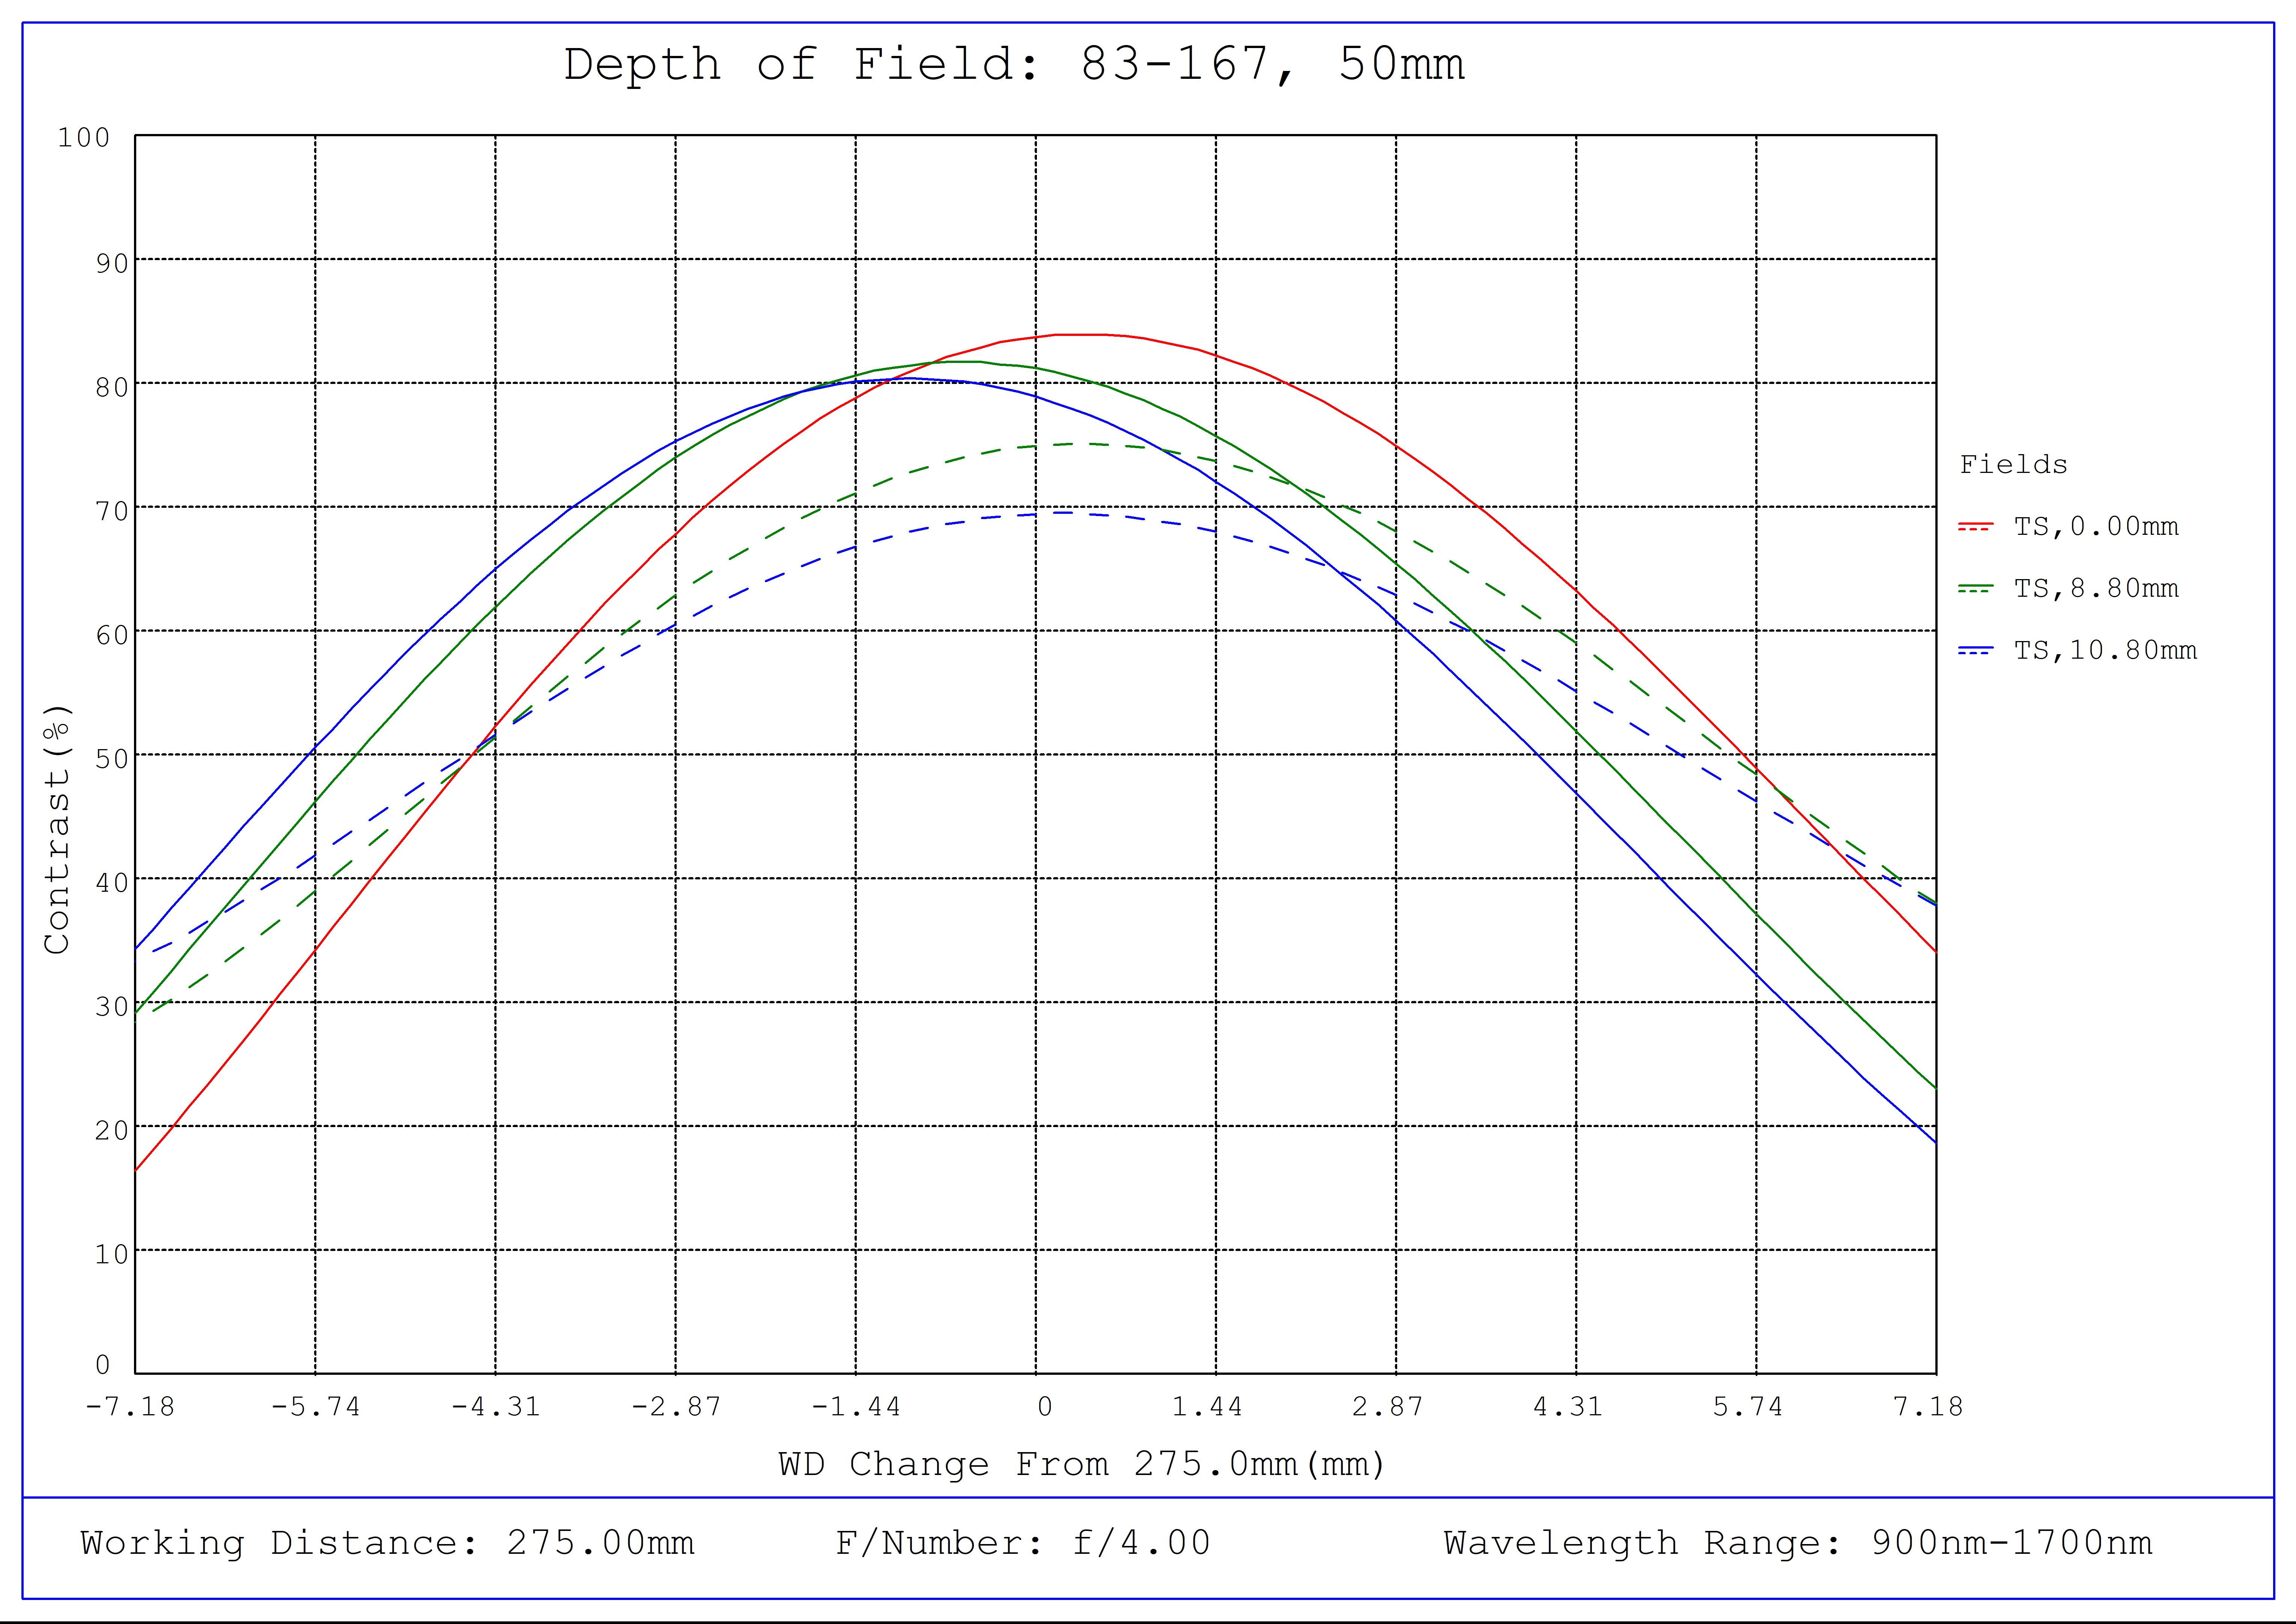 #83-167, 50mm SWIR Series Fixed Focal Length Lens, M42 x 1.0, Depth of Field Plot, 275mm Working Distance, f4